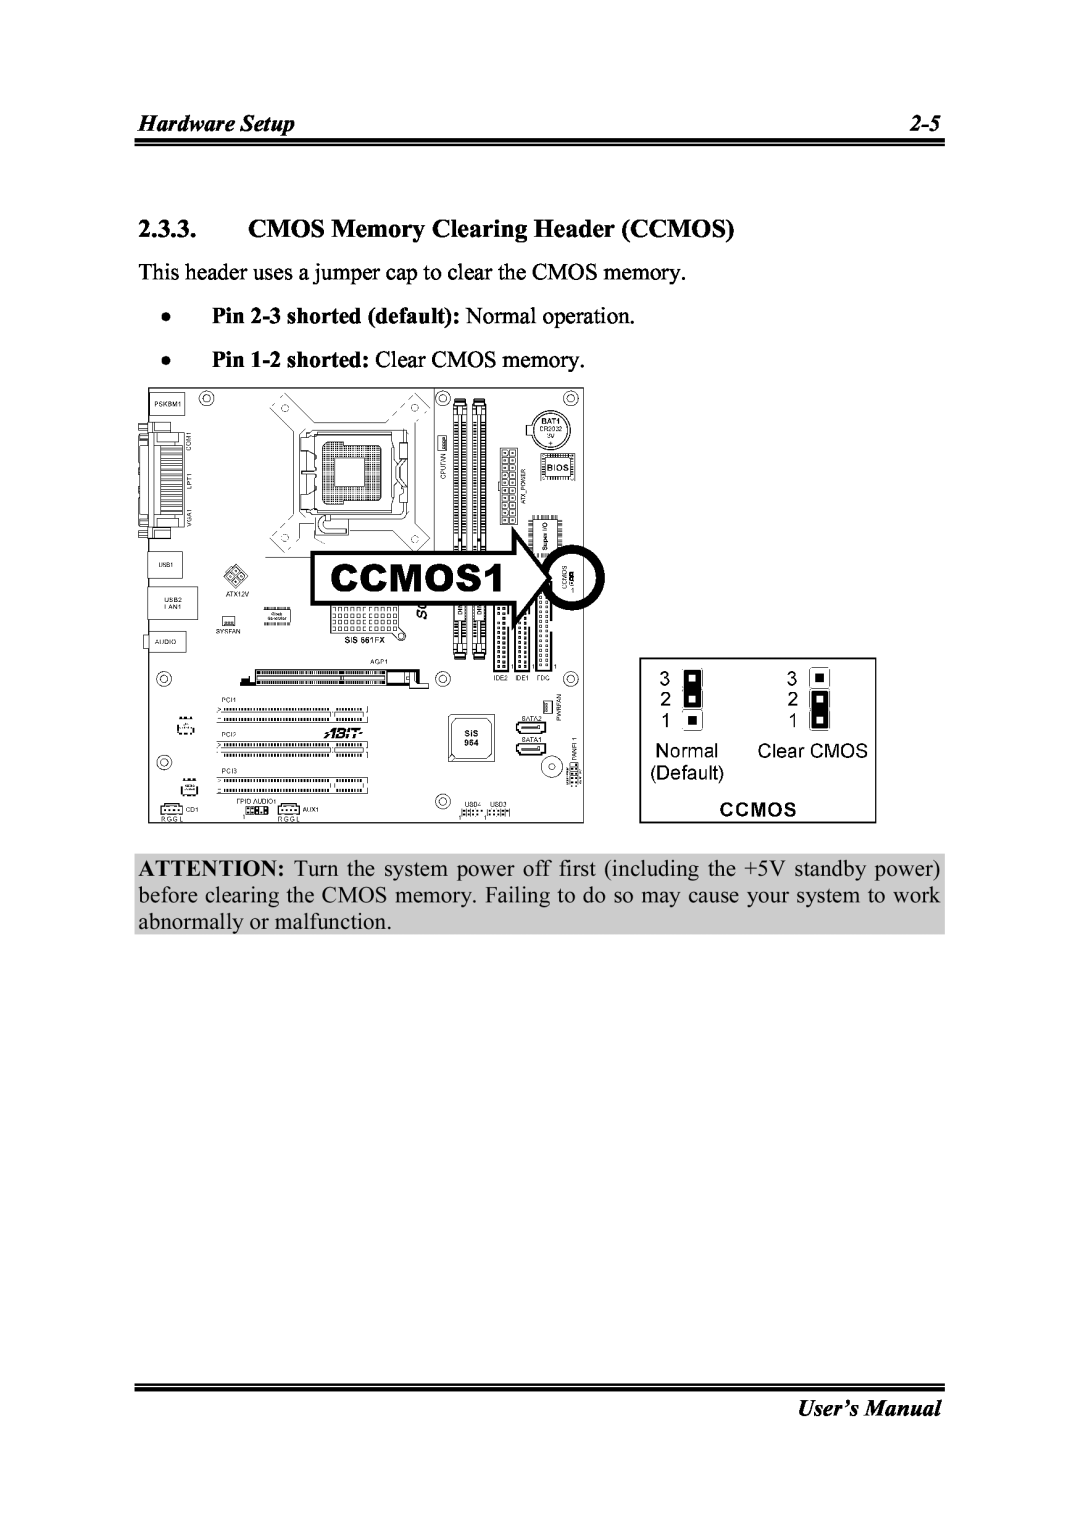 Intel SG-81 CMOS Memory Clearing Header CCMOS, Hardware Setup, •Pin 2-3shorted default: Normal operation, User’s Manual 